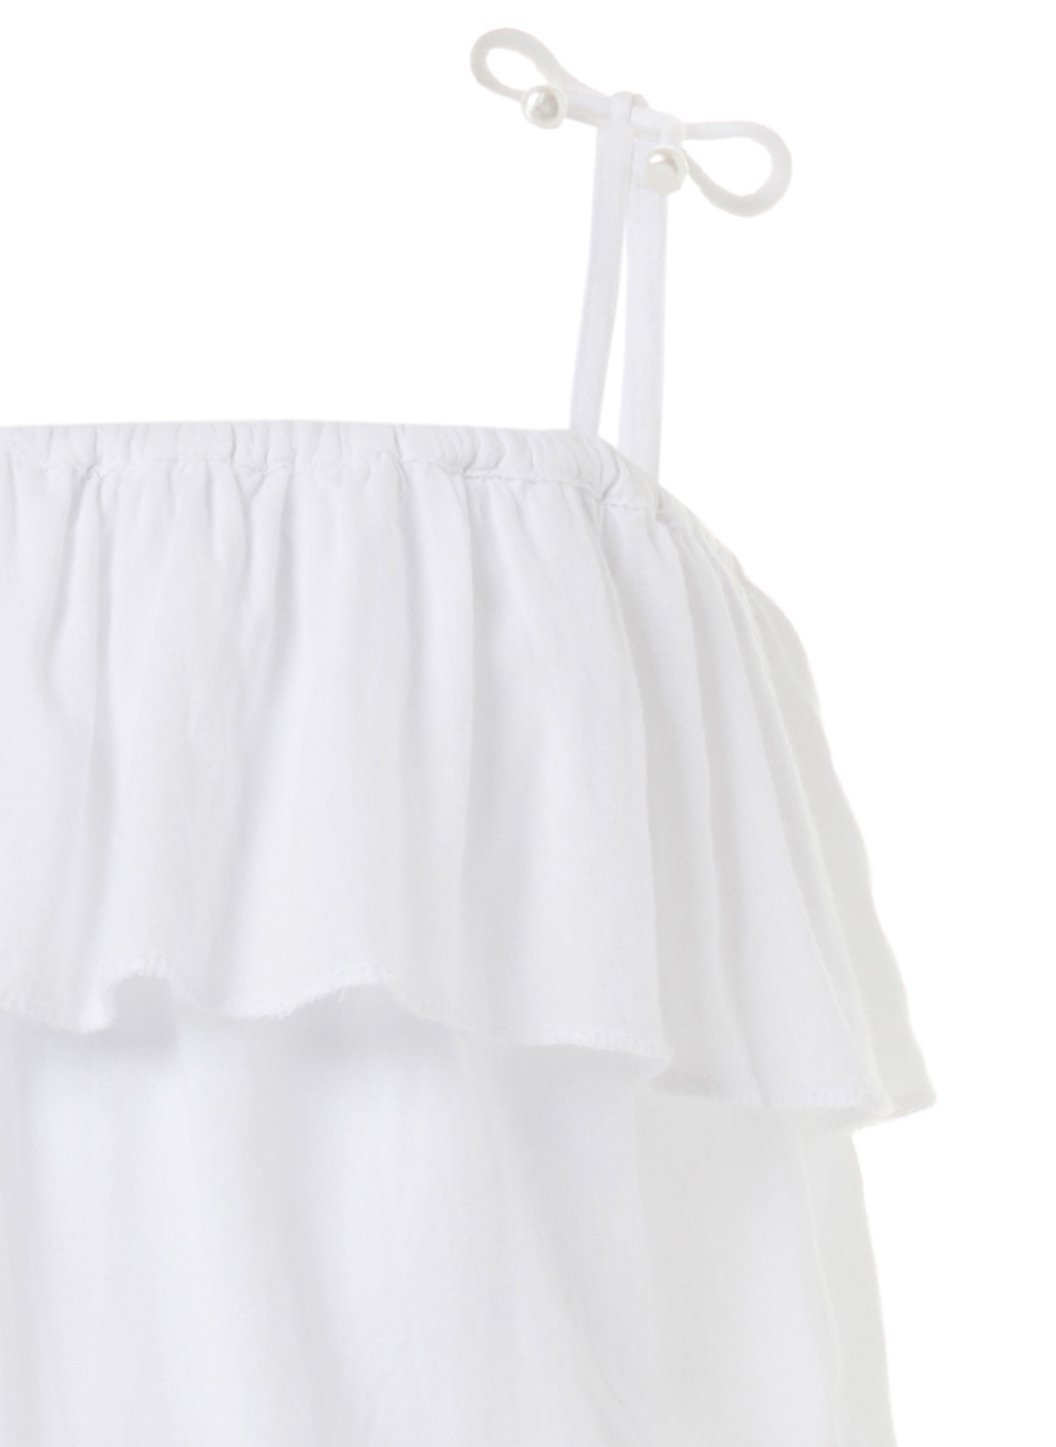 Baby Joy White Beach Dress - FINAL SALE